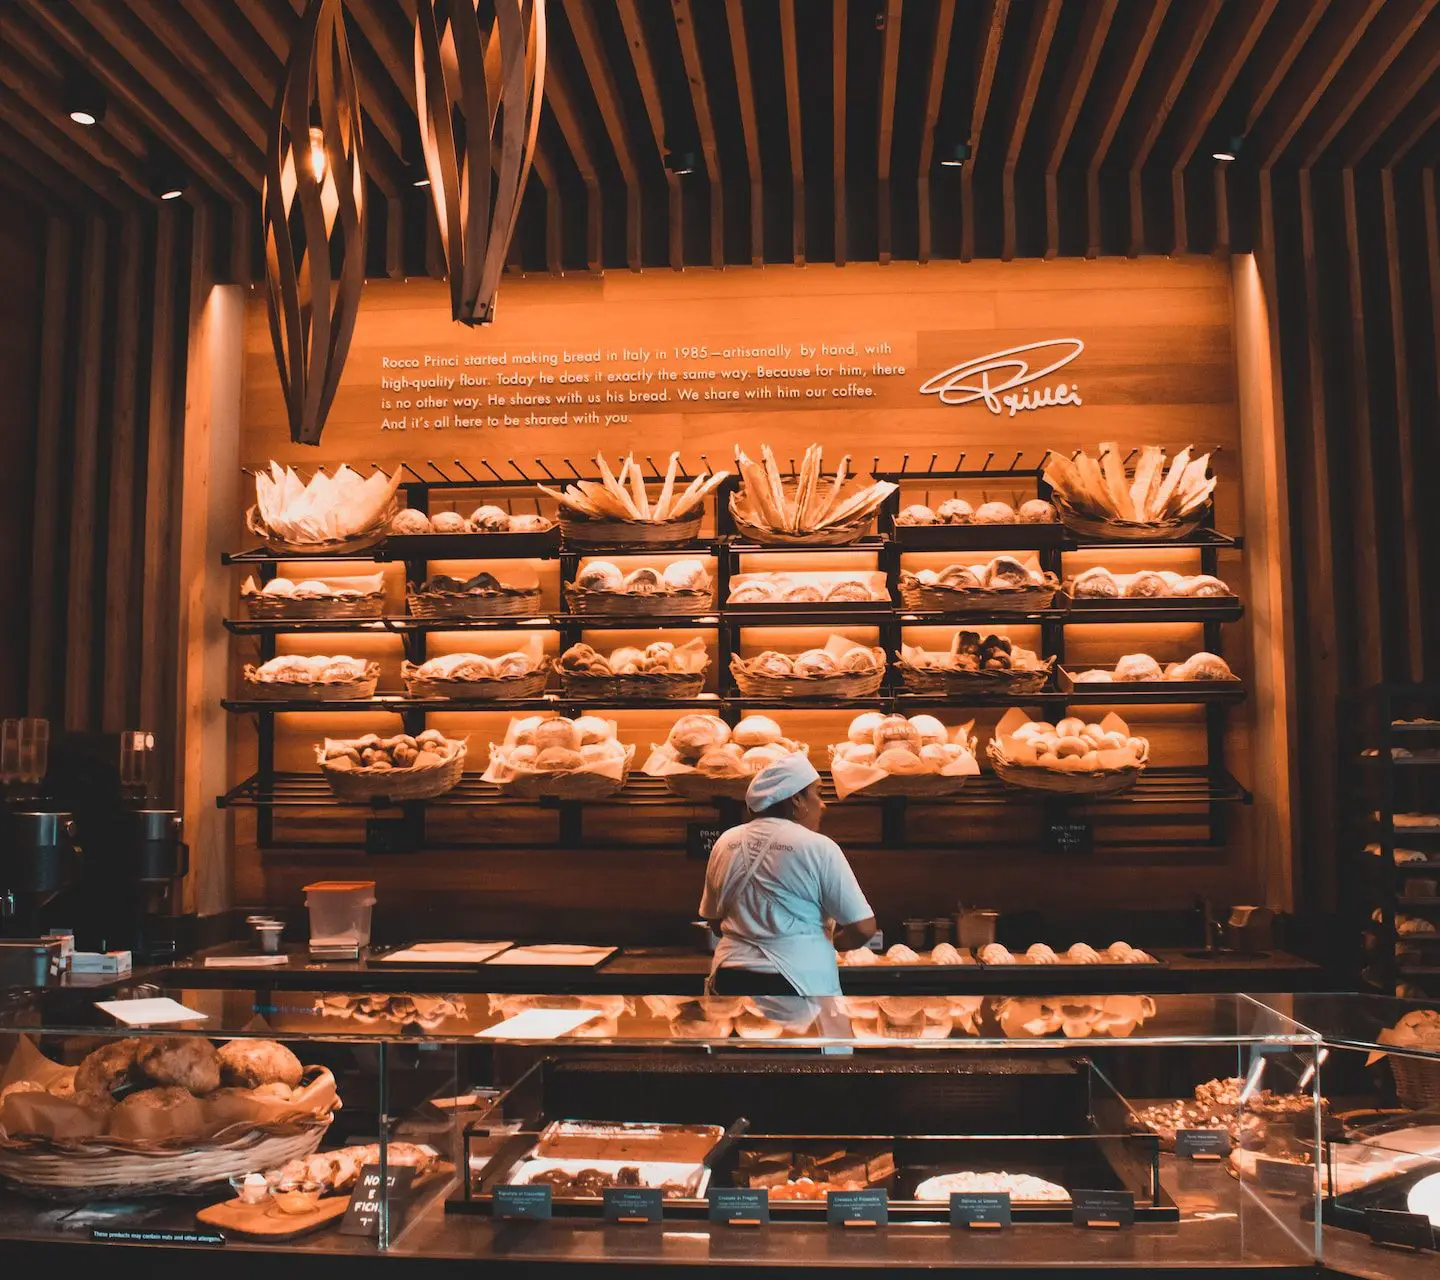 The 10 Best Bakeries in Orlando